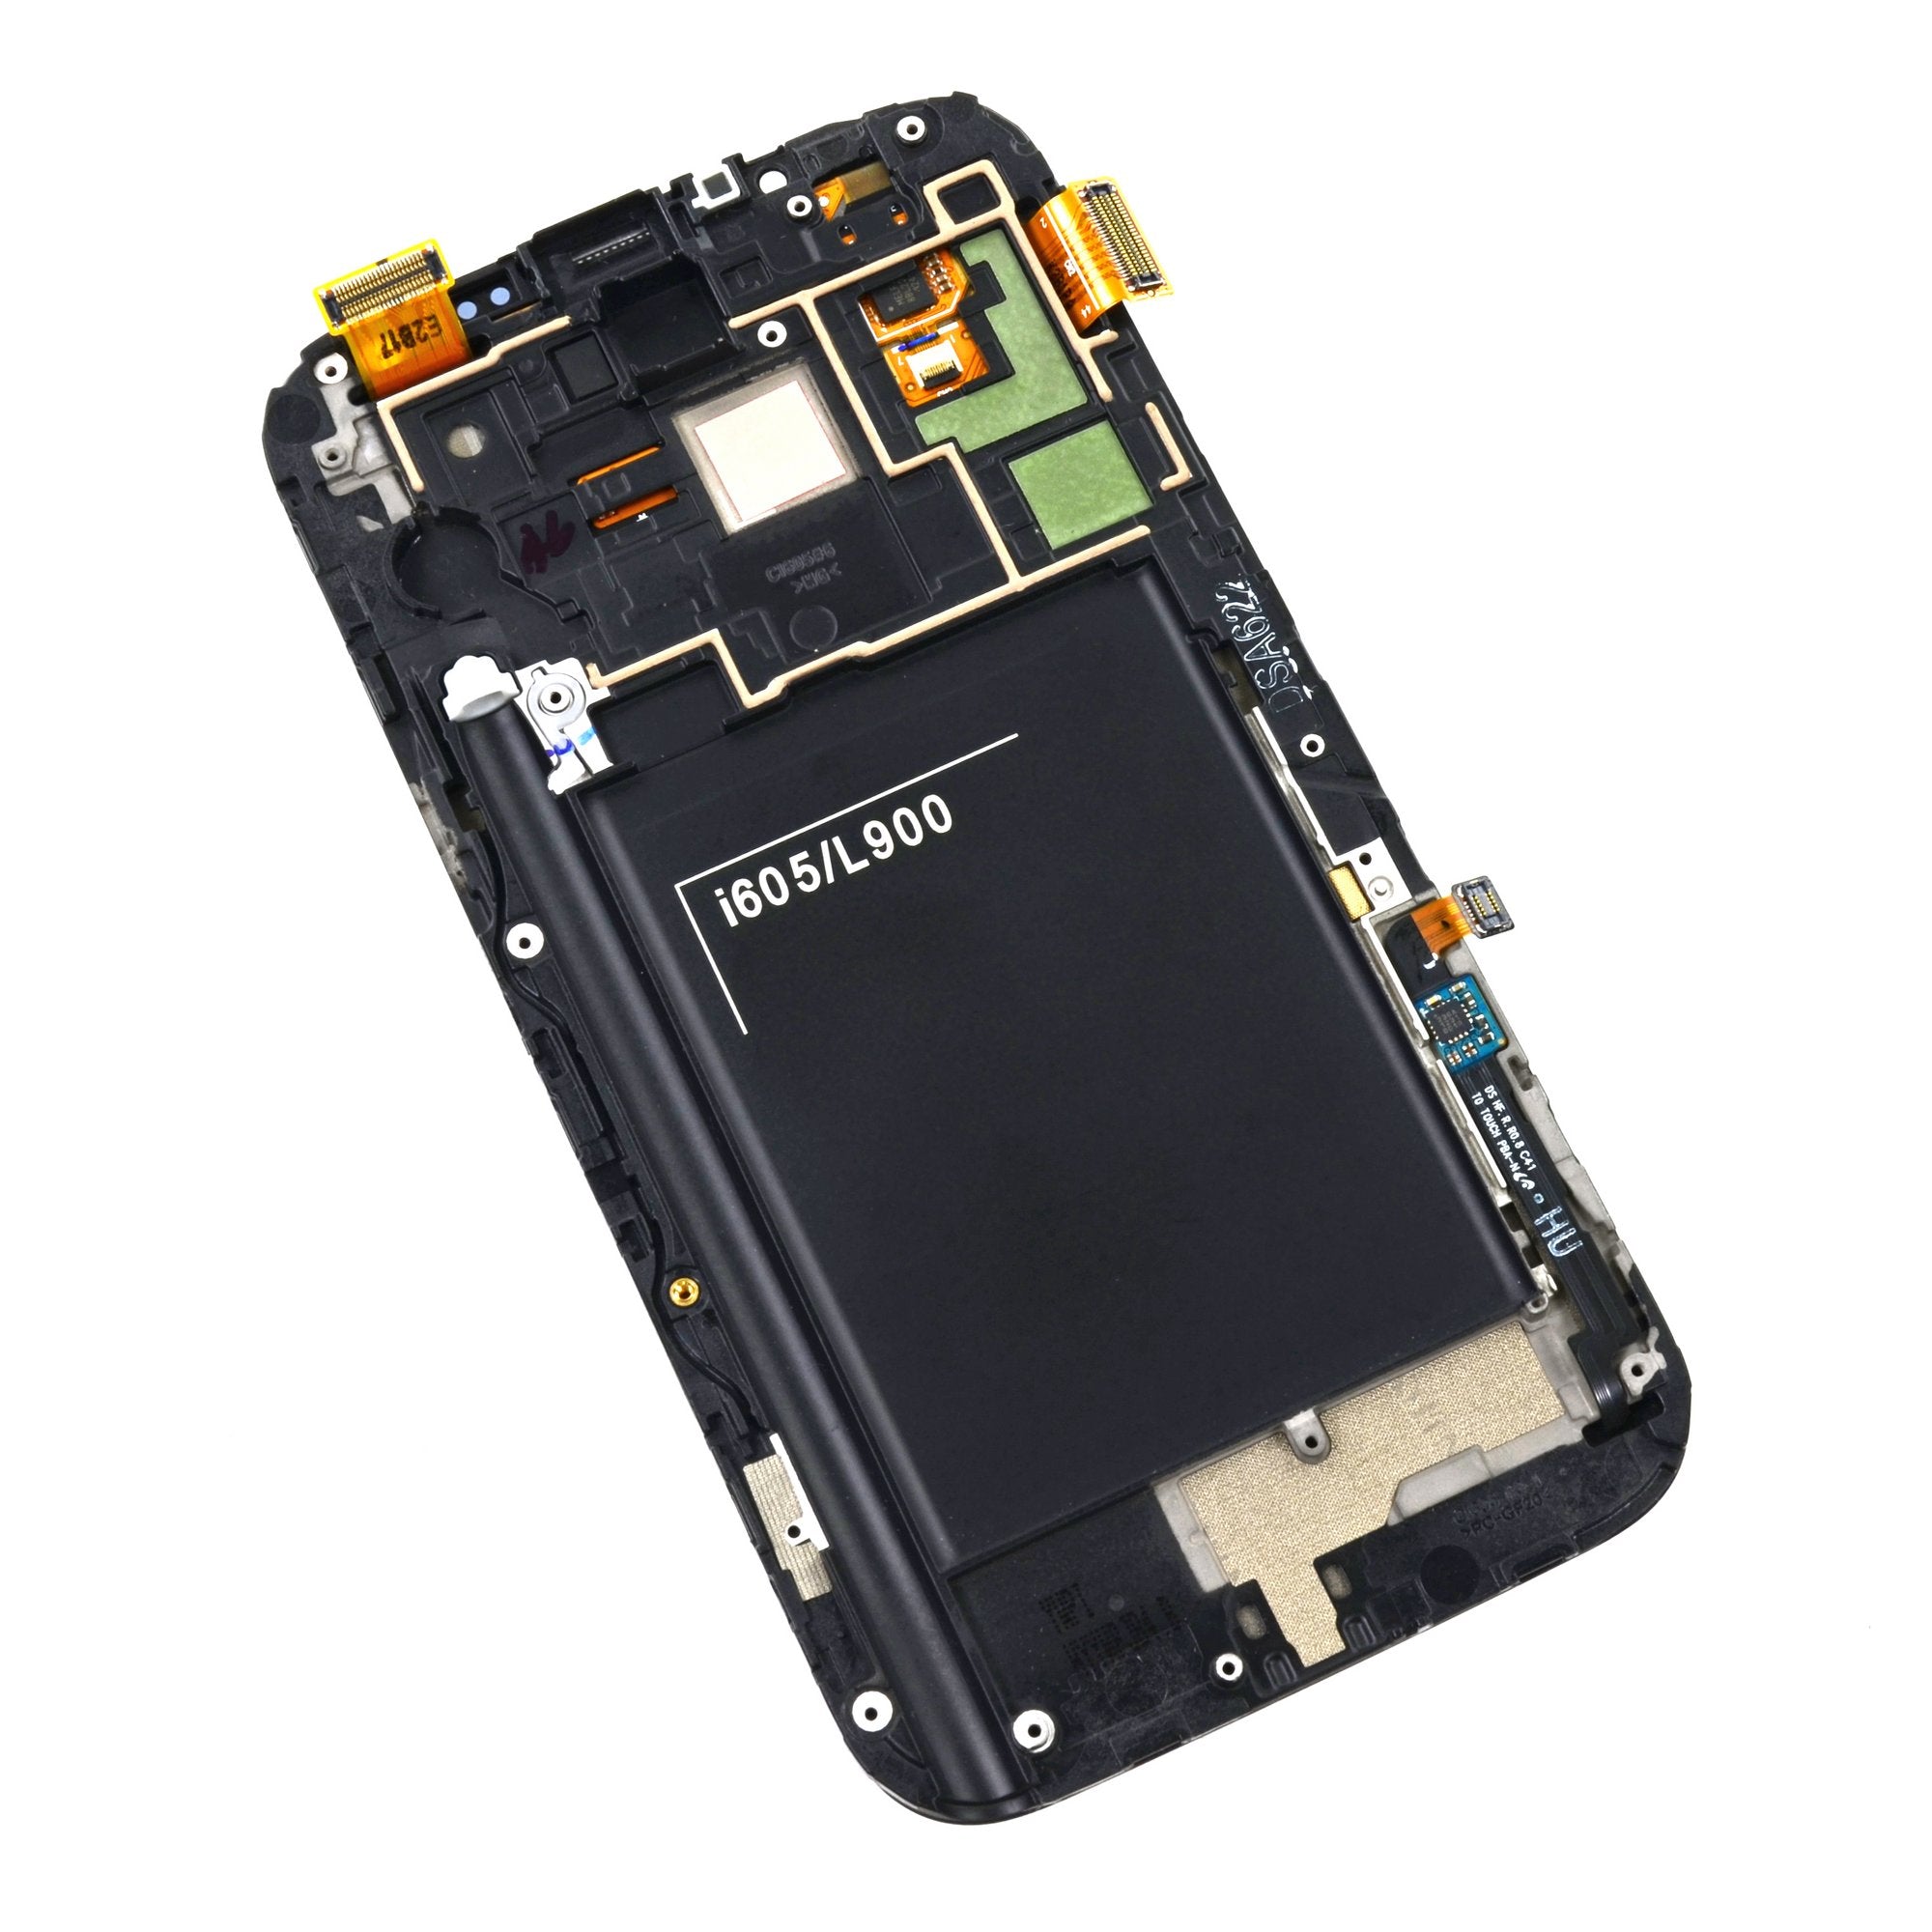 Galaxy Note II (Sprint/Verizon) Screen White New